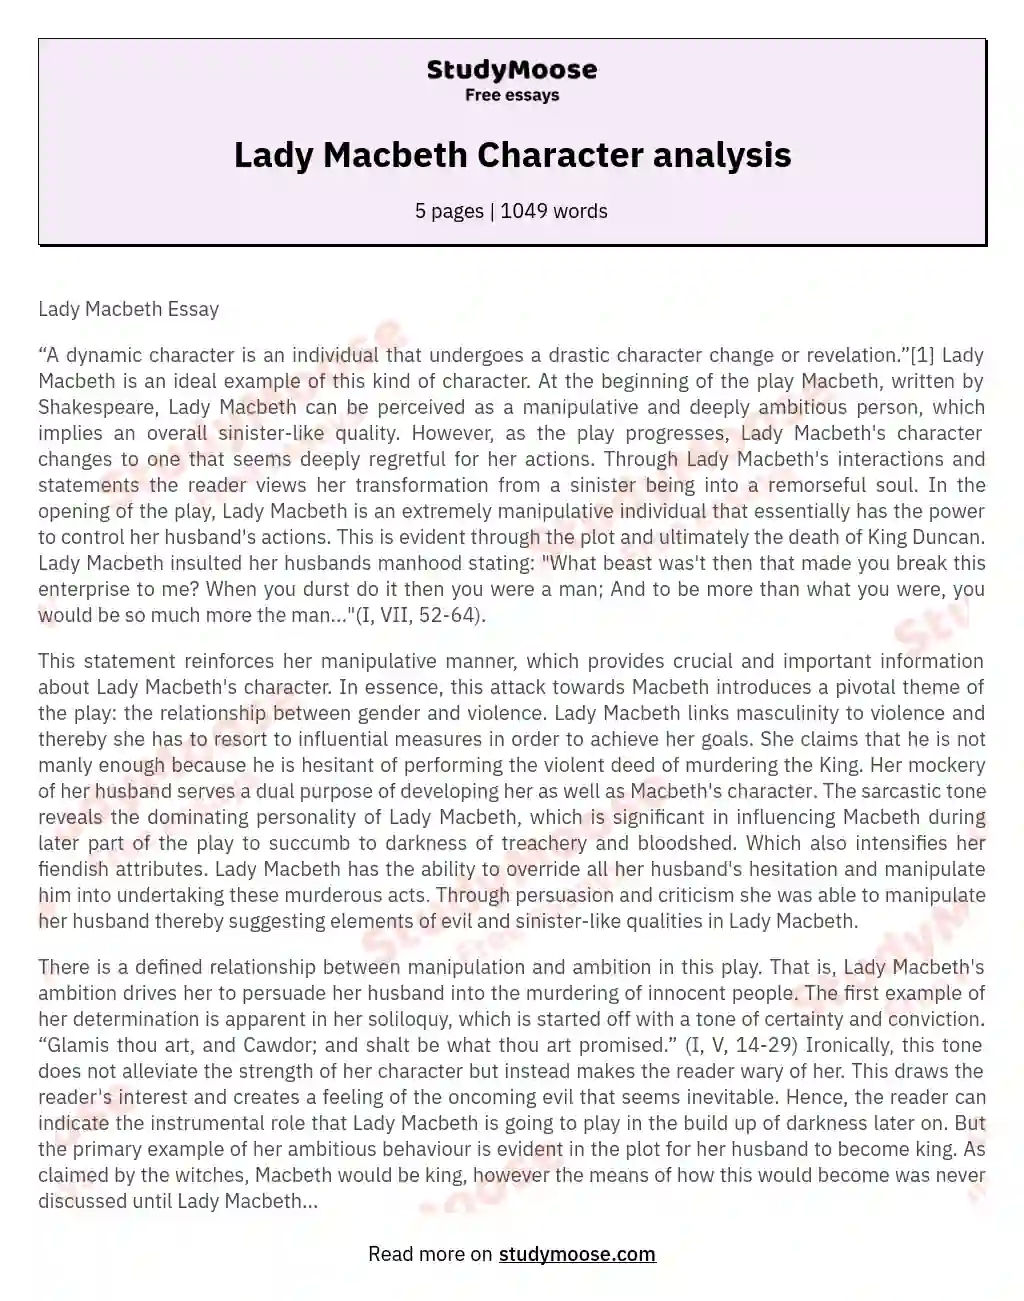 Lady Macbeth Character analysis essay